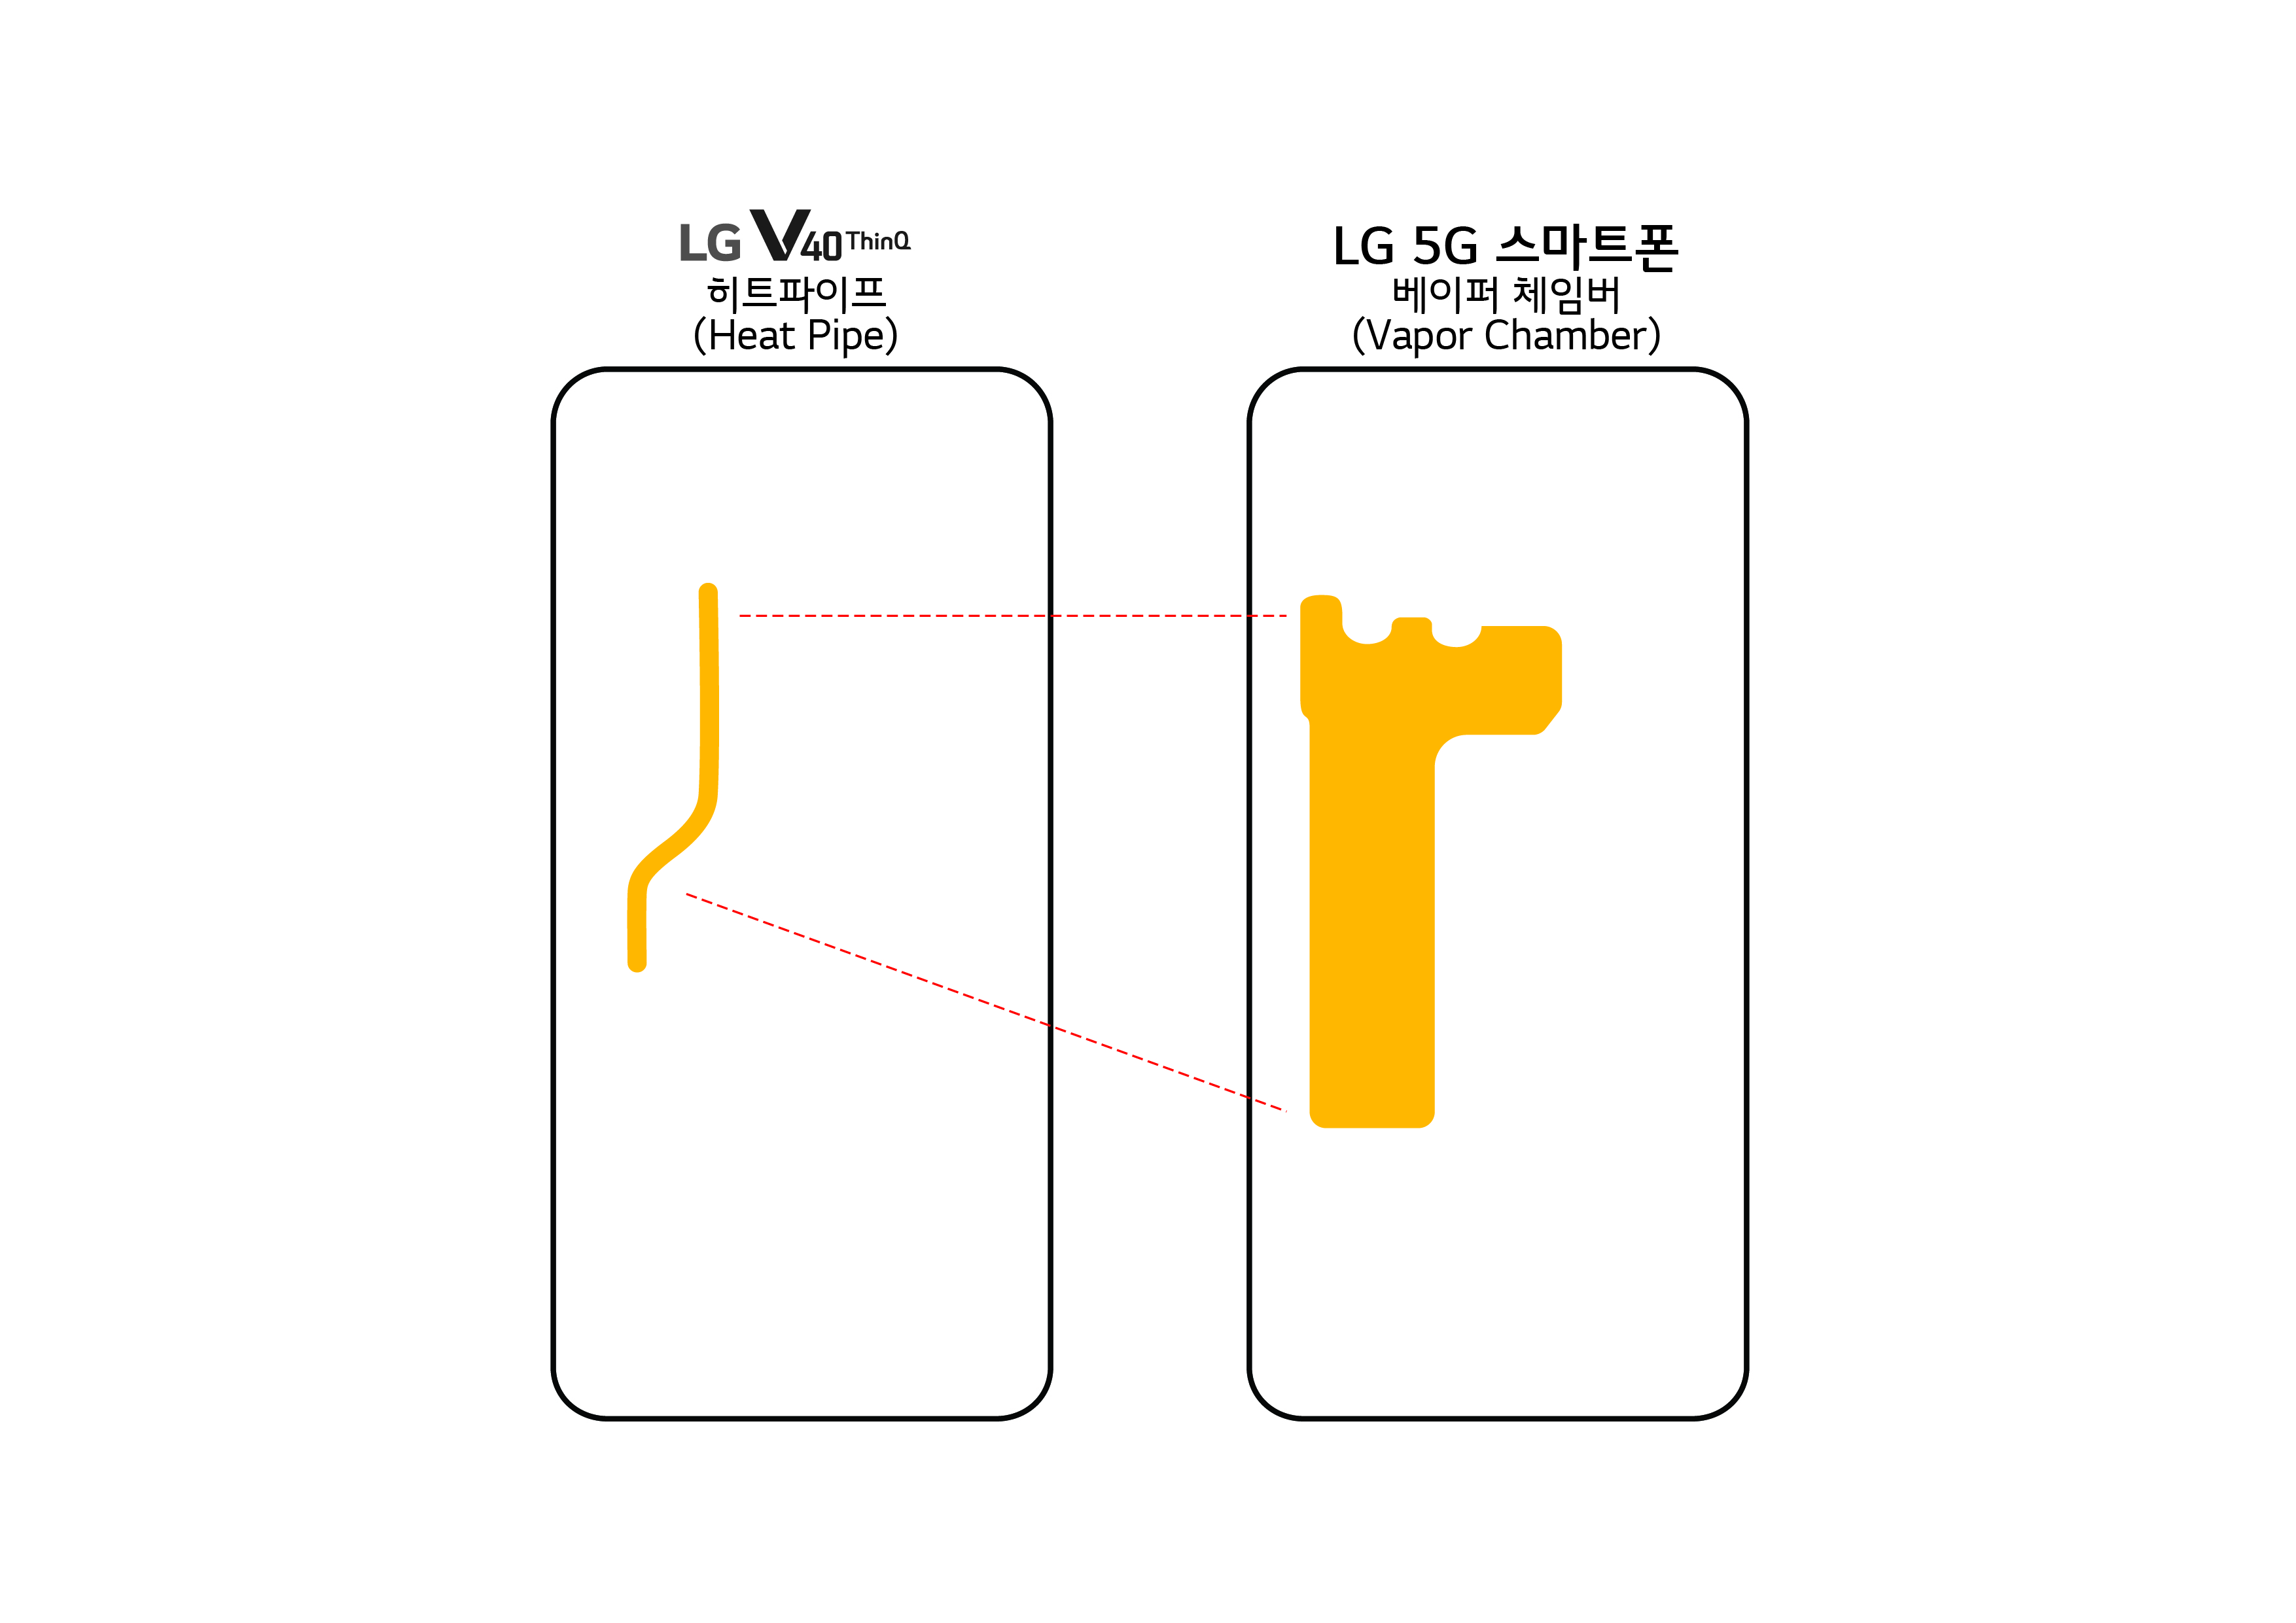 LG 5G 스마트폰 베이퍼 체임버: 다음달 24일 LG전자가 선보이는 5G 스마트폰은 기존 히트 파이프보다 방열(防熱) 성능이 한층 강력해진 ‘베이퍼 체임버(Vapor Chamber)’를 적용했다. 표면적은 LG V40 ThinQ에 탑재된 히트 파이프의 2.7배에 달하고 담겨있는 물의 양은 2배 이상 많아 스마트폰 내 열을 더욱 빠르게 흡수하고 온도 변화를 줄인다. 사진은 LG V40 ThinQ의 히트 파이프(왼쪽)와 5G 스마트폰의 베이퍼 체임버(오른쪽) 비교 개념도